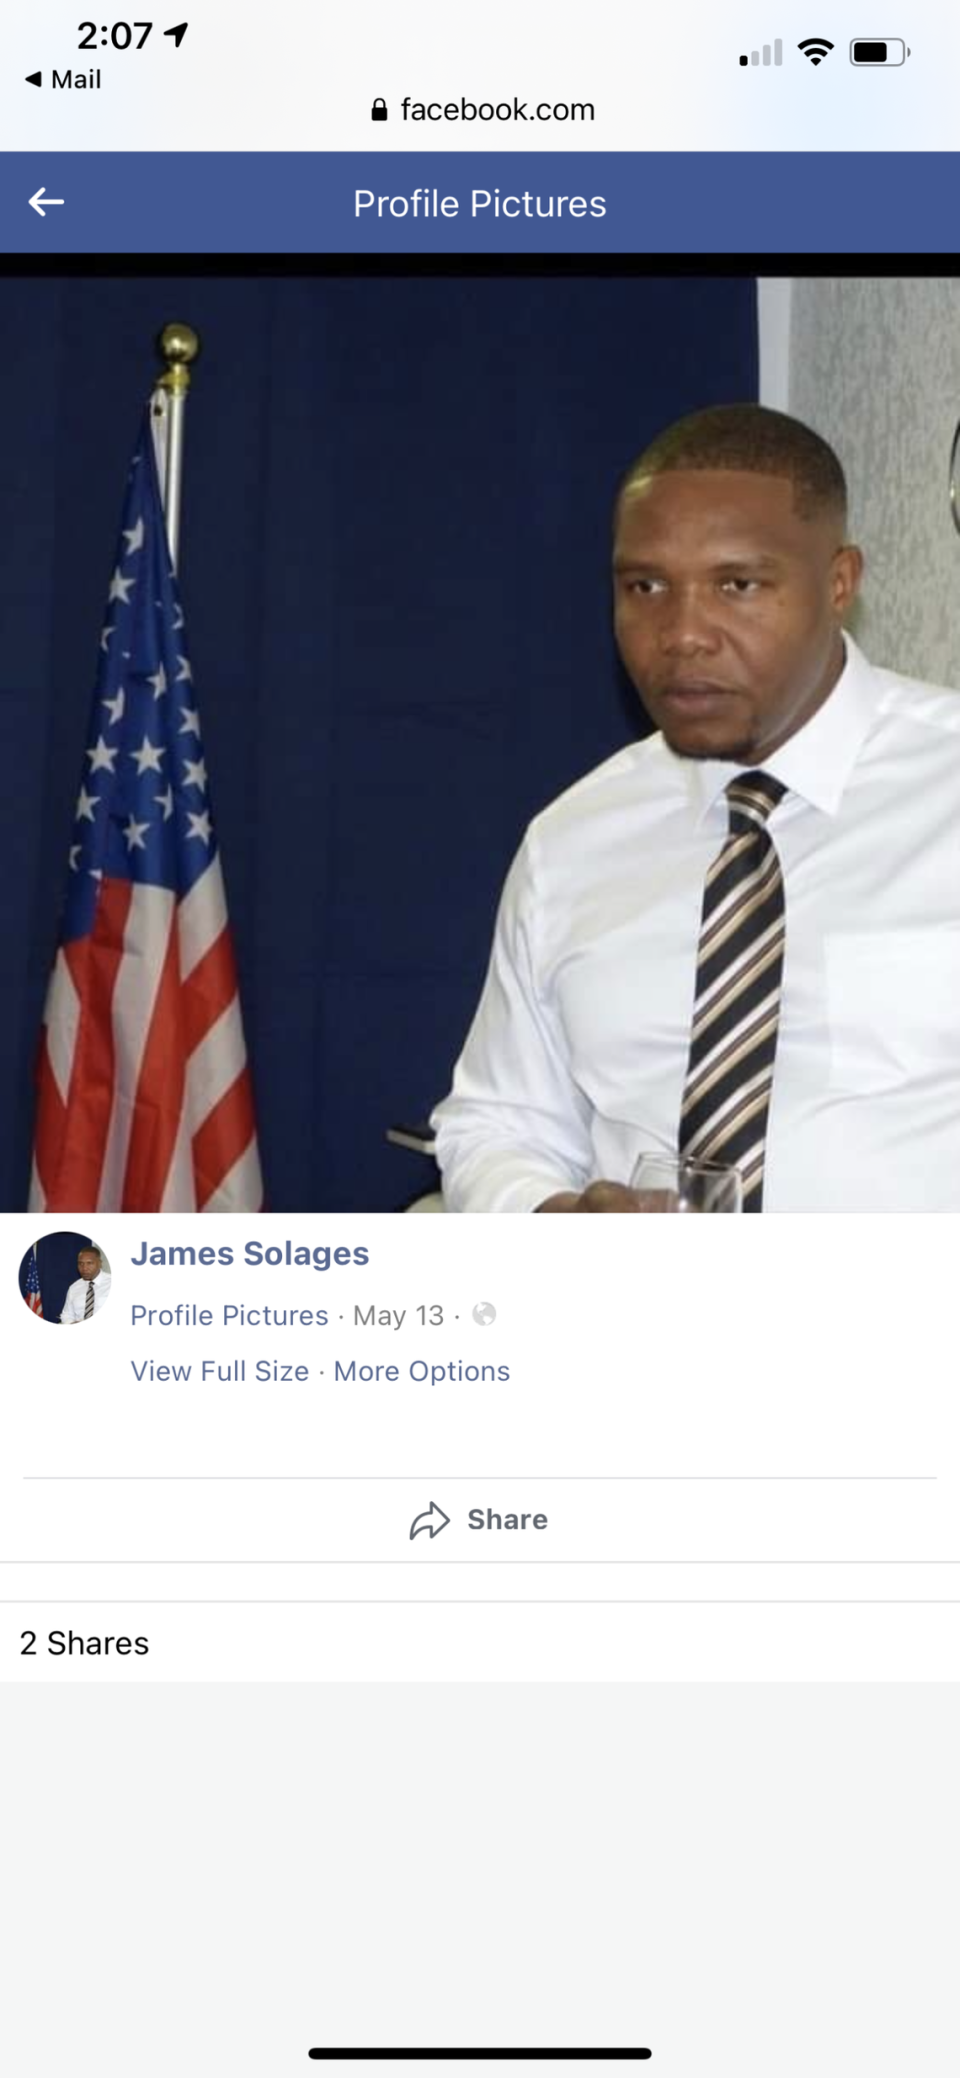 James Solages’ Facebook profile